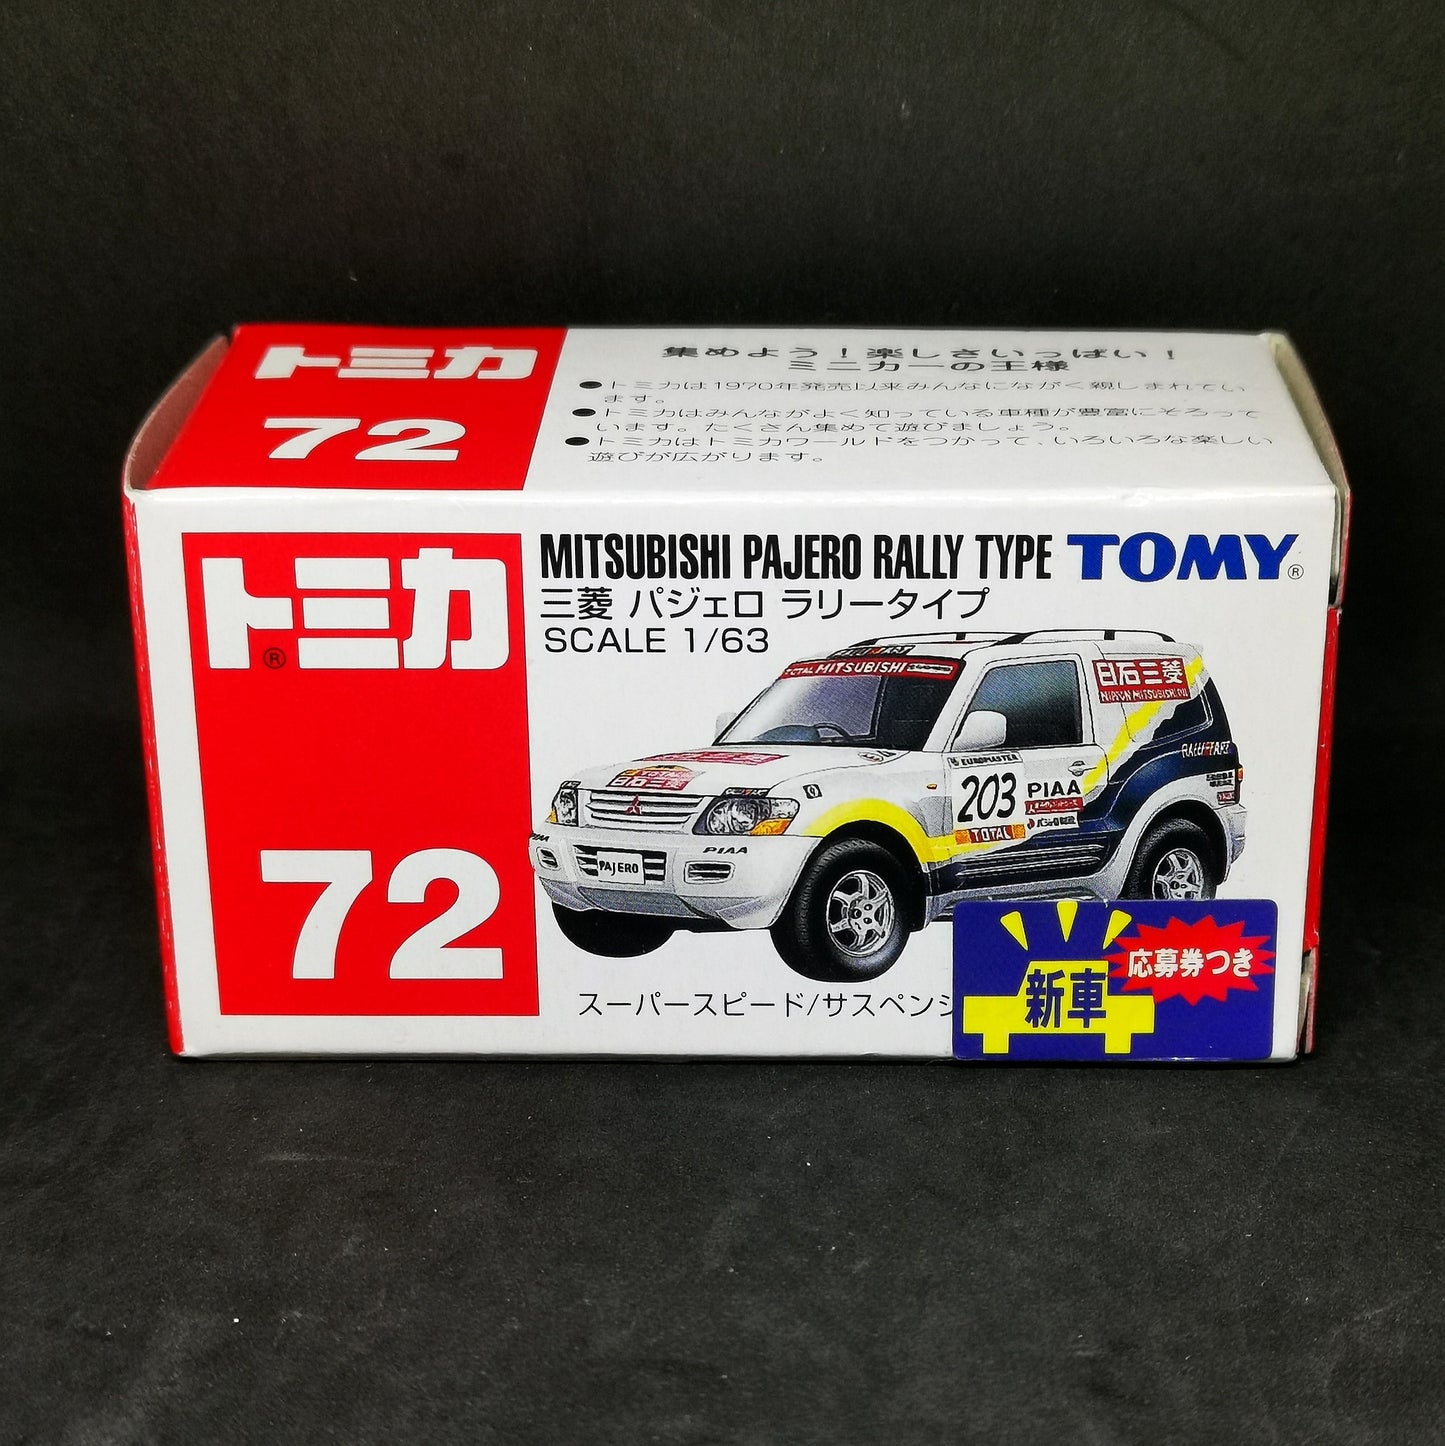 Tomica #72 Mitsubishi Pajero Rally Type